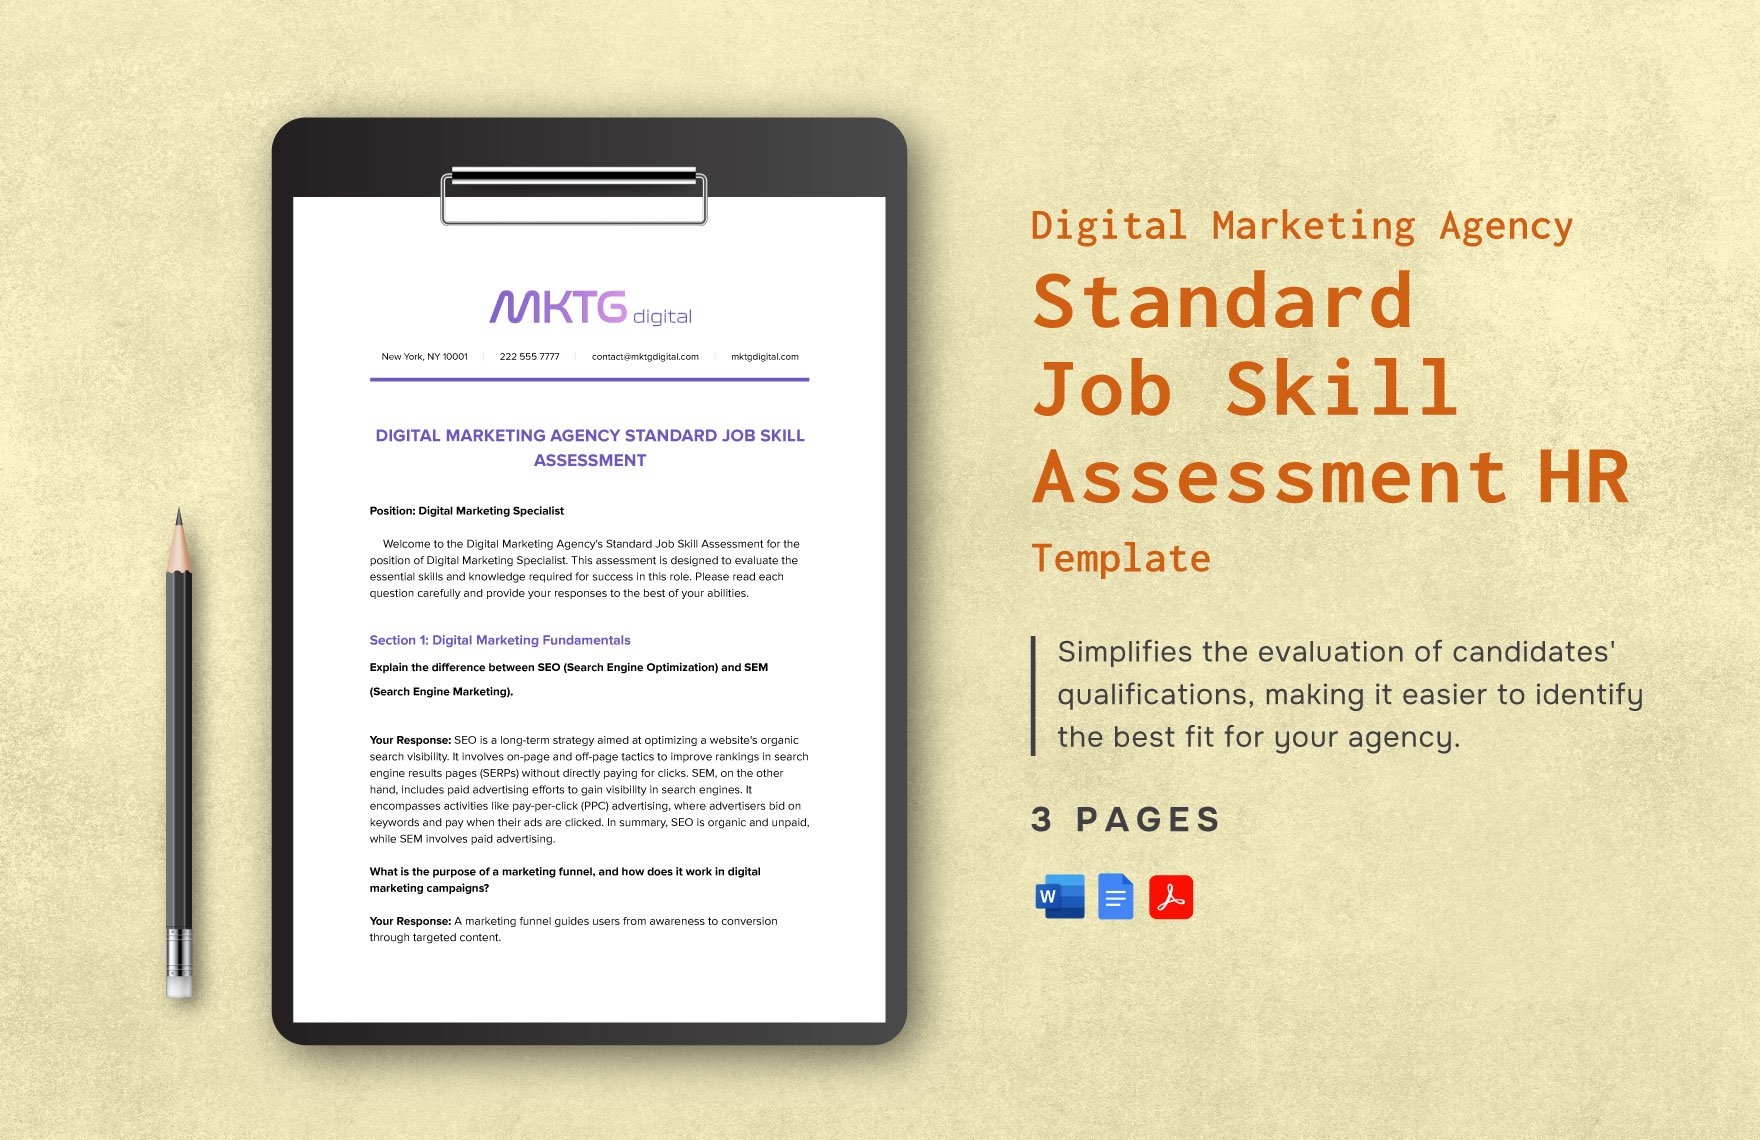 Digital Marketing Agency Standard Job Skill Assessment HR Template